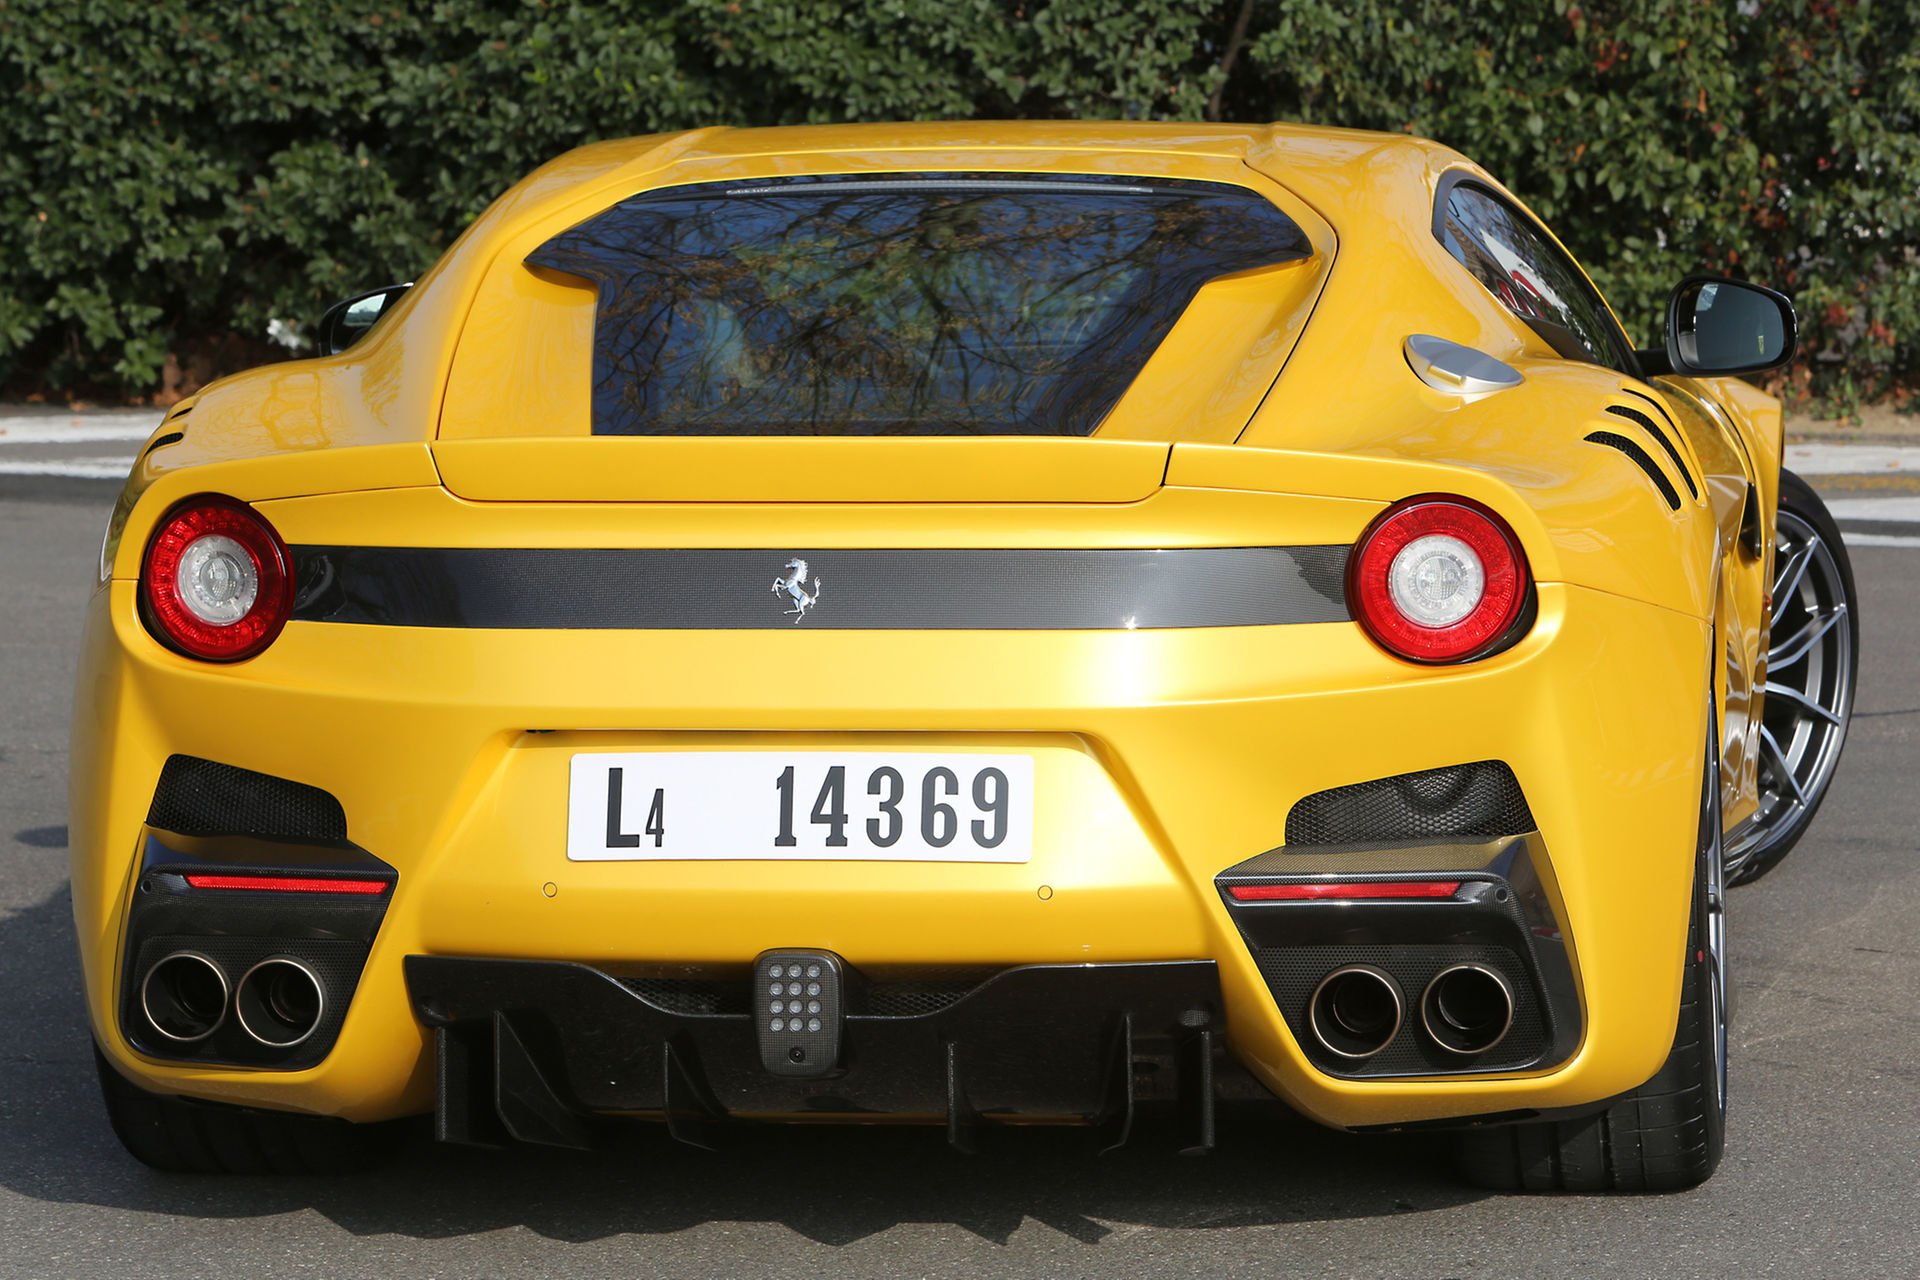 2016, Cars, Coupe, F12tdf, Ferrari, Yellow Wallpaper